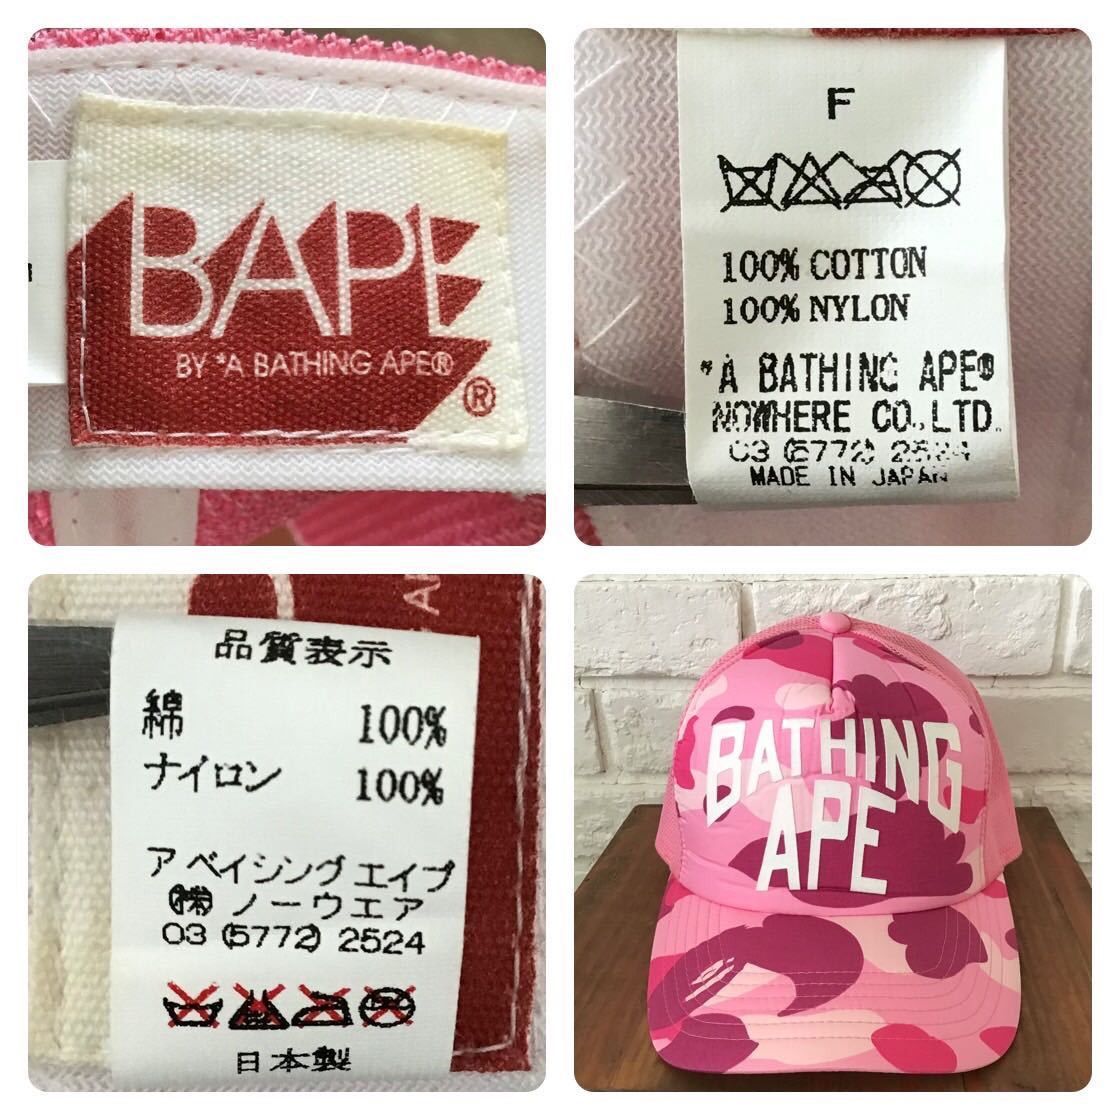 Bape BAPE pink camo New York logo trucker hat mesh cap ★ Size ONE SIZE - 10 Preview